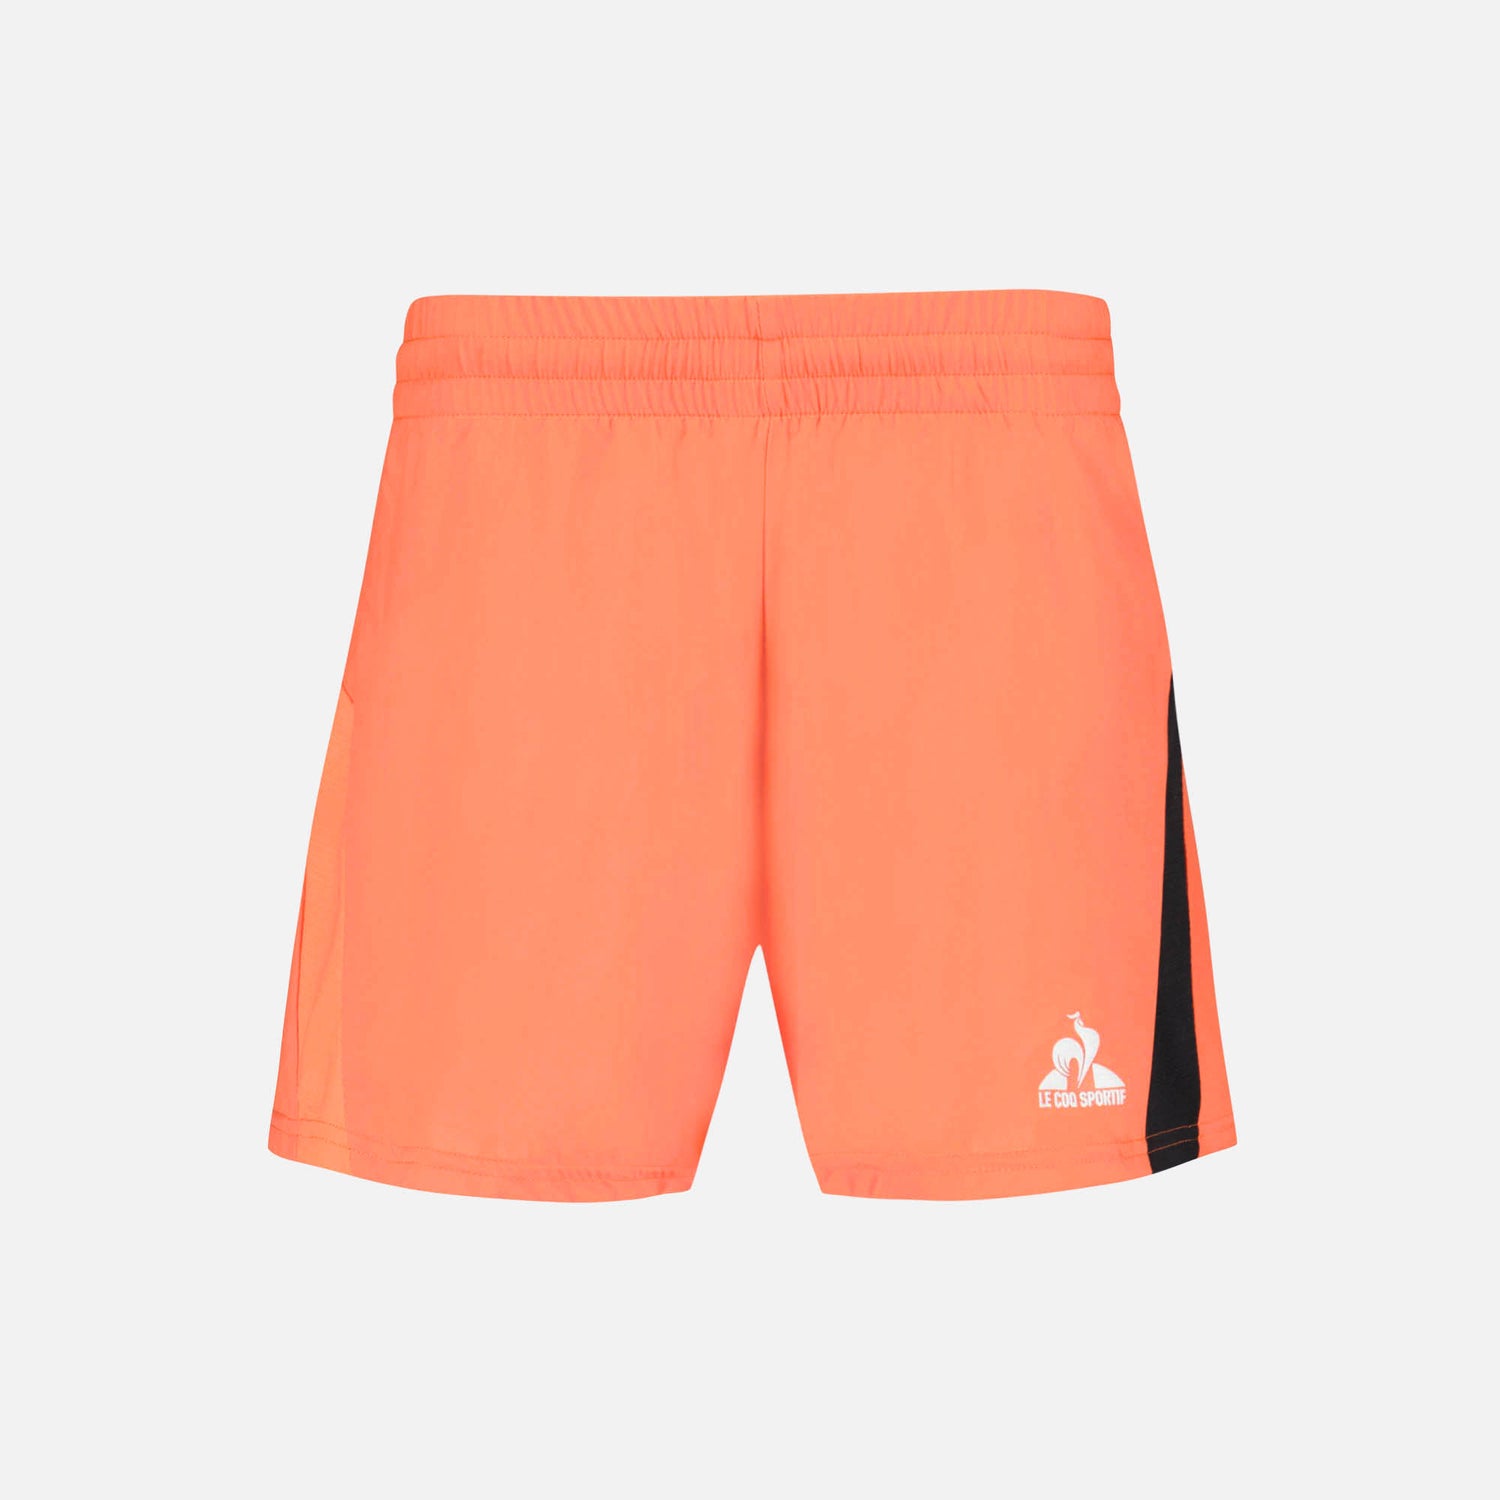 2410238-TRAINING Short N°1 W orange perf/black  | Shorts für Damen